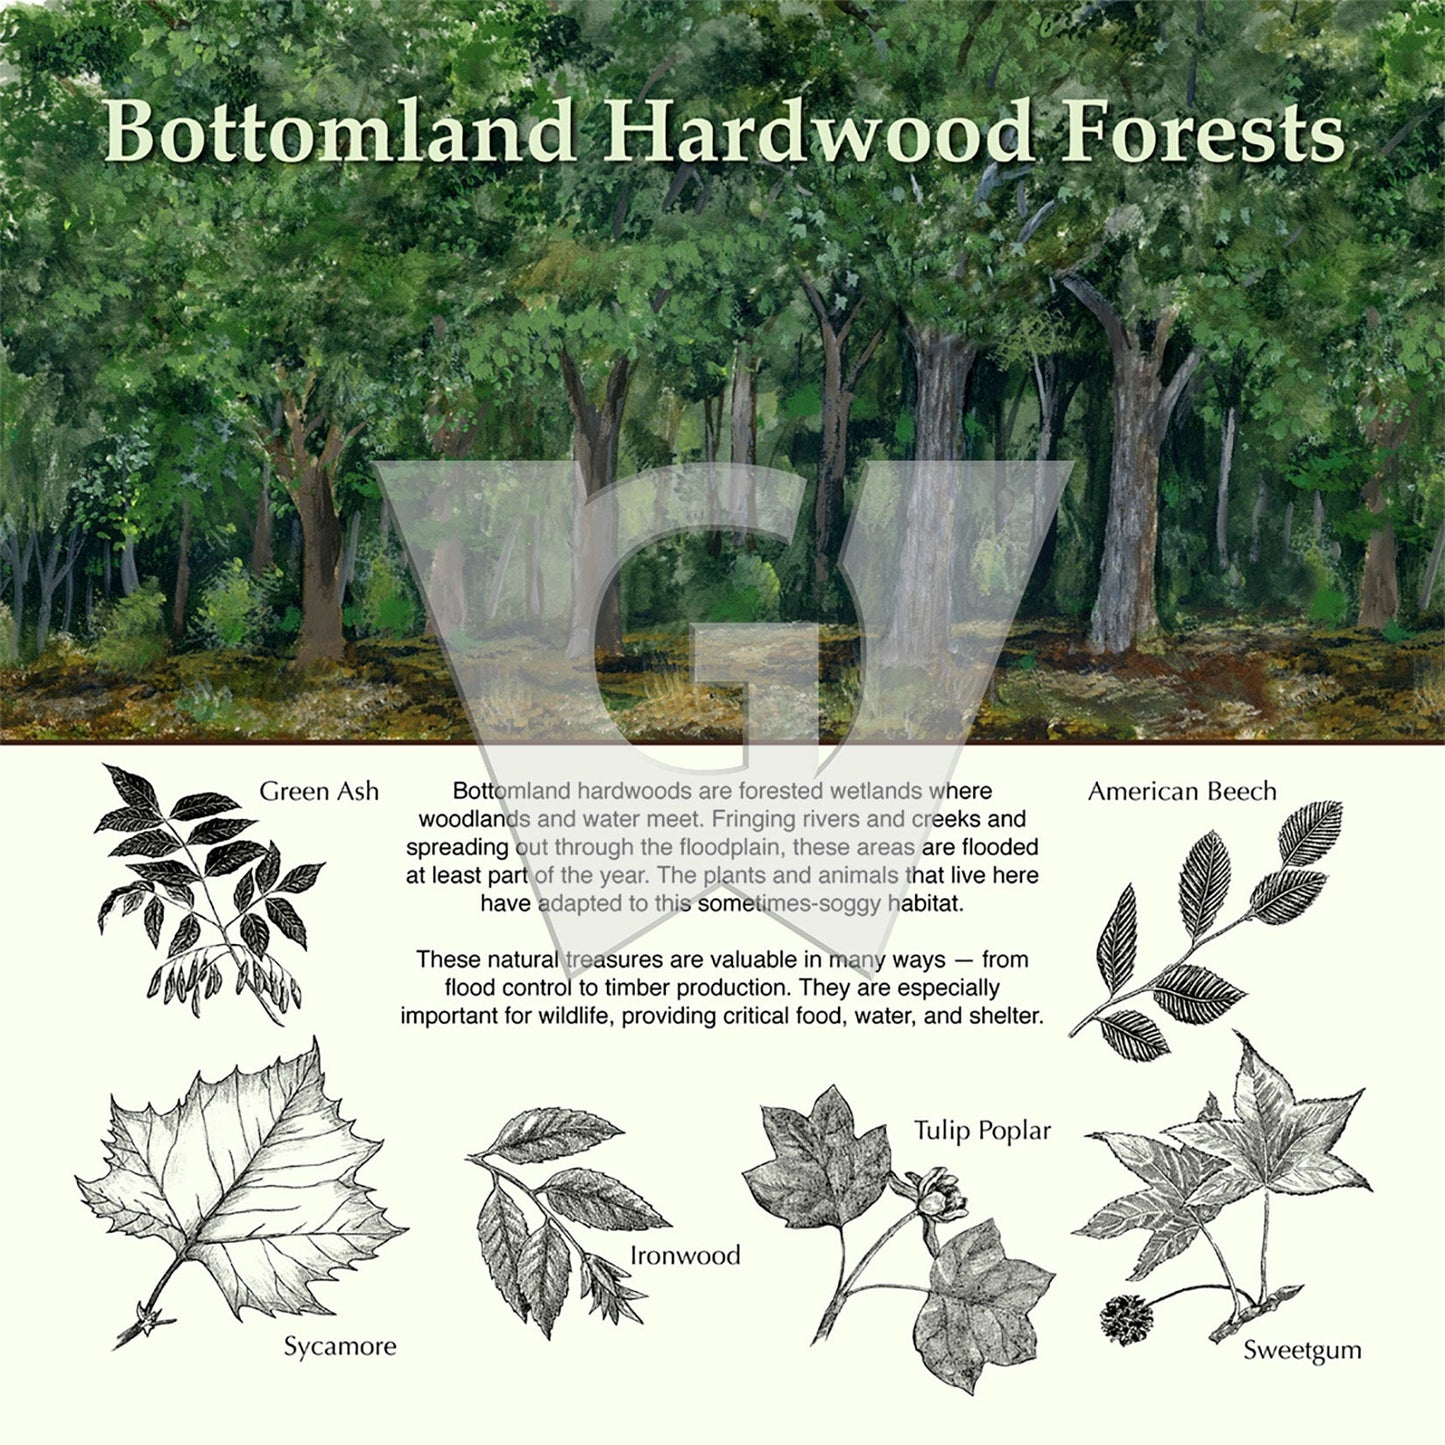 Bottomland Hardwood Forests